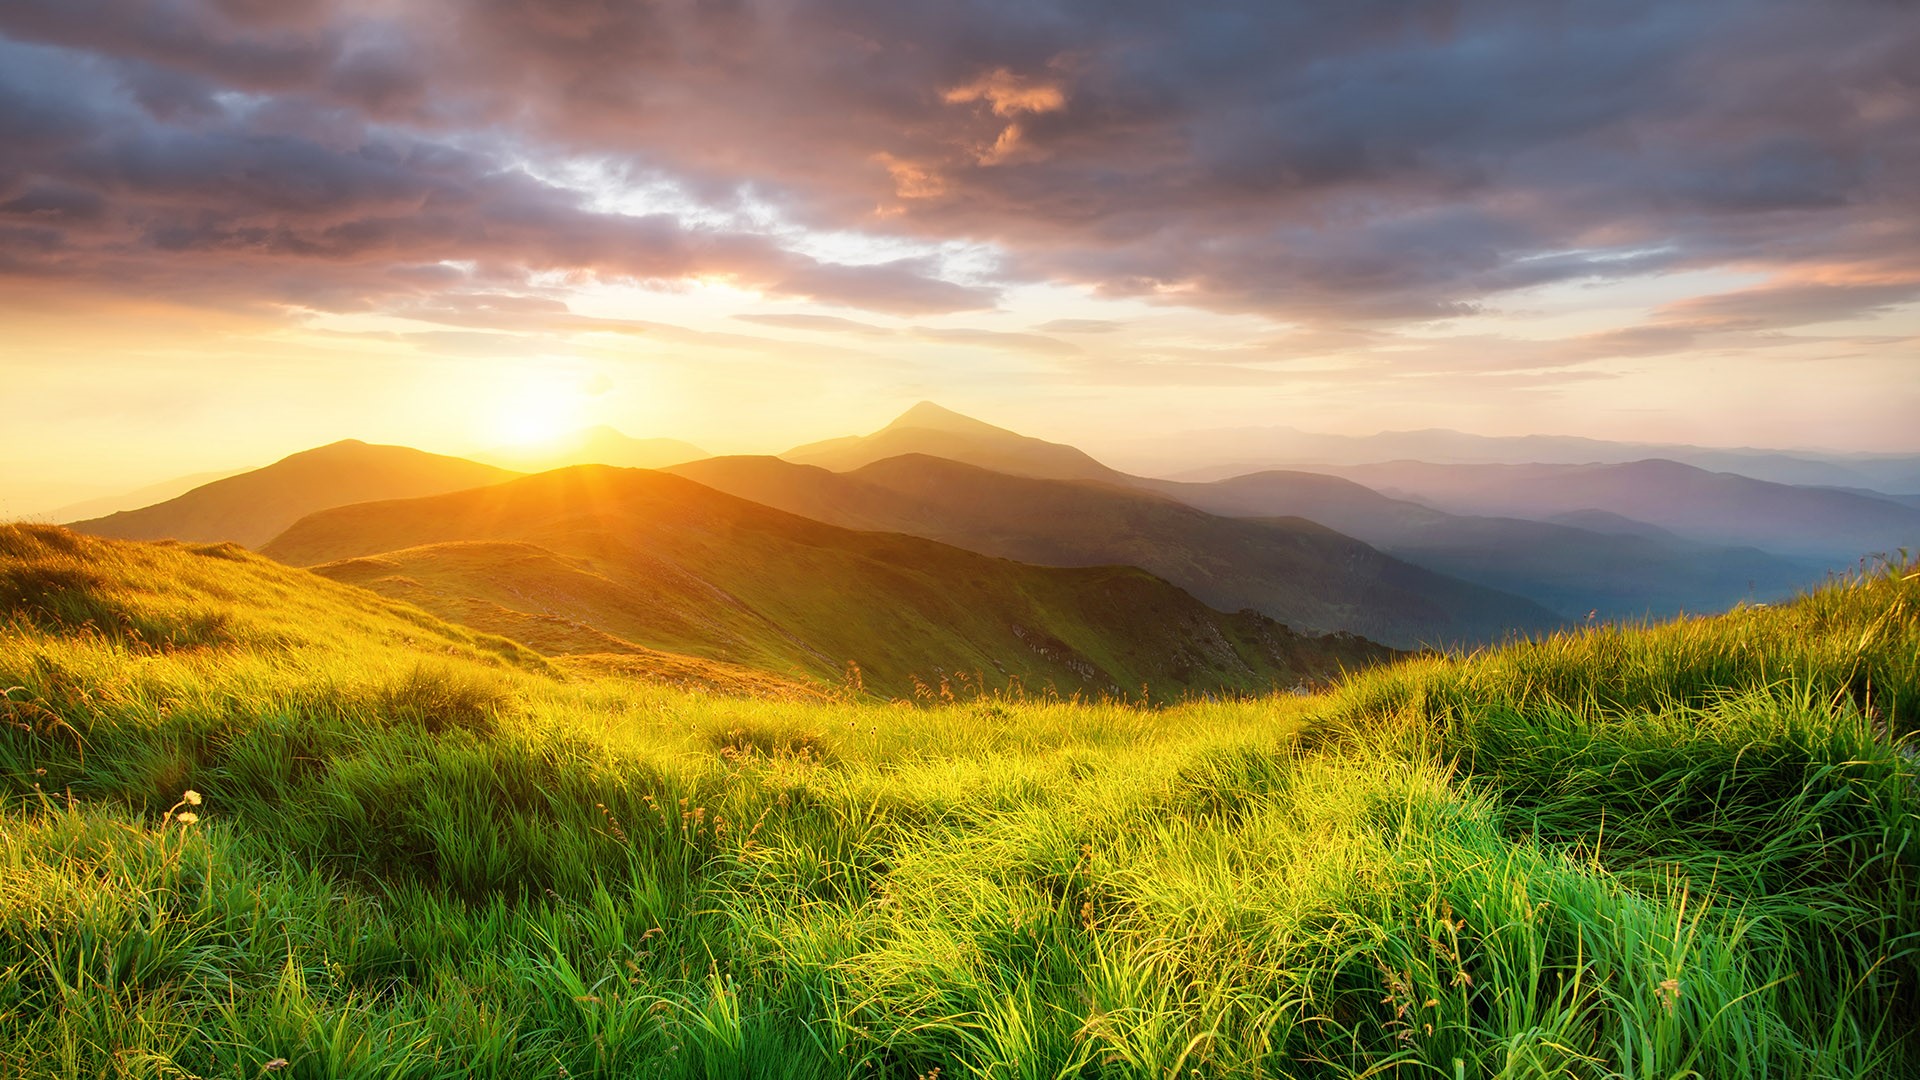 Mountain Valley Landscape During Sunrise At Summer Time Carpathian Mountains Ukraine Windows 10 Spotlight Images